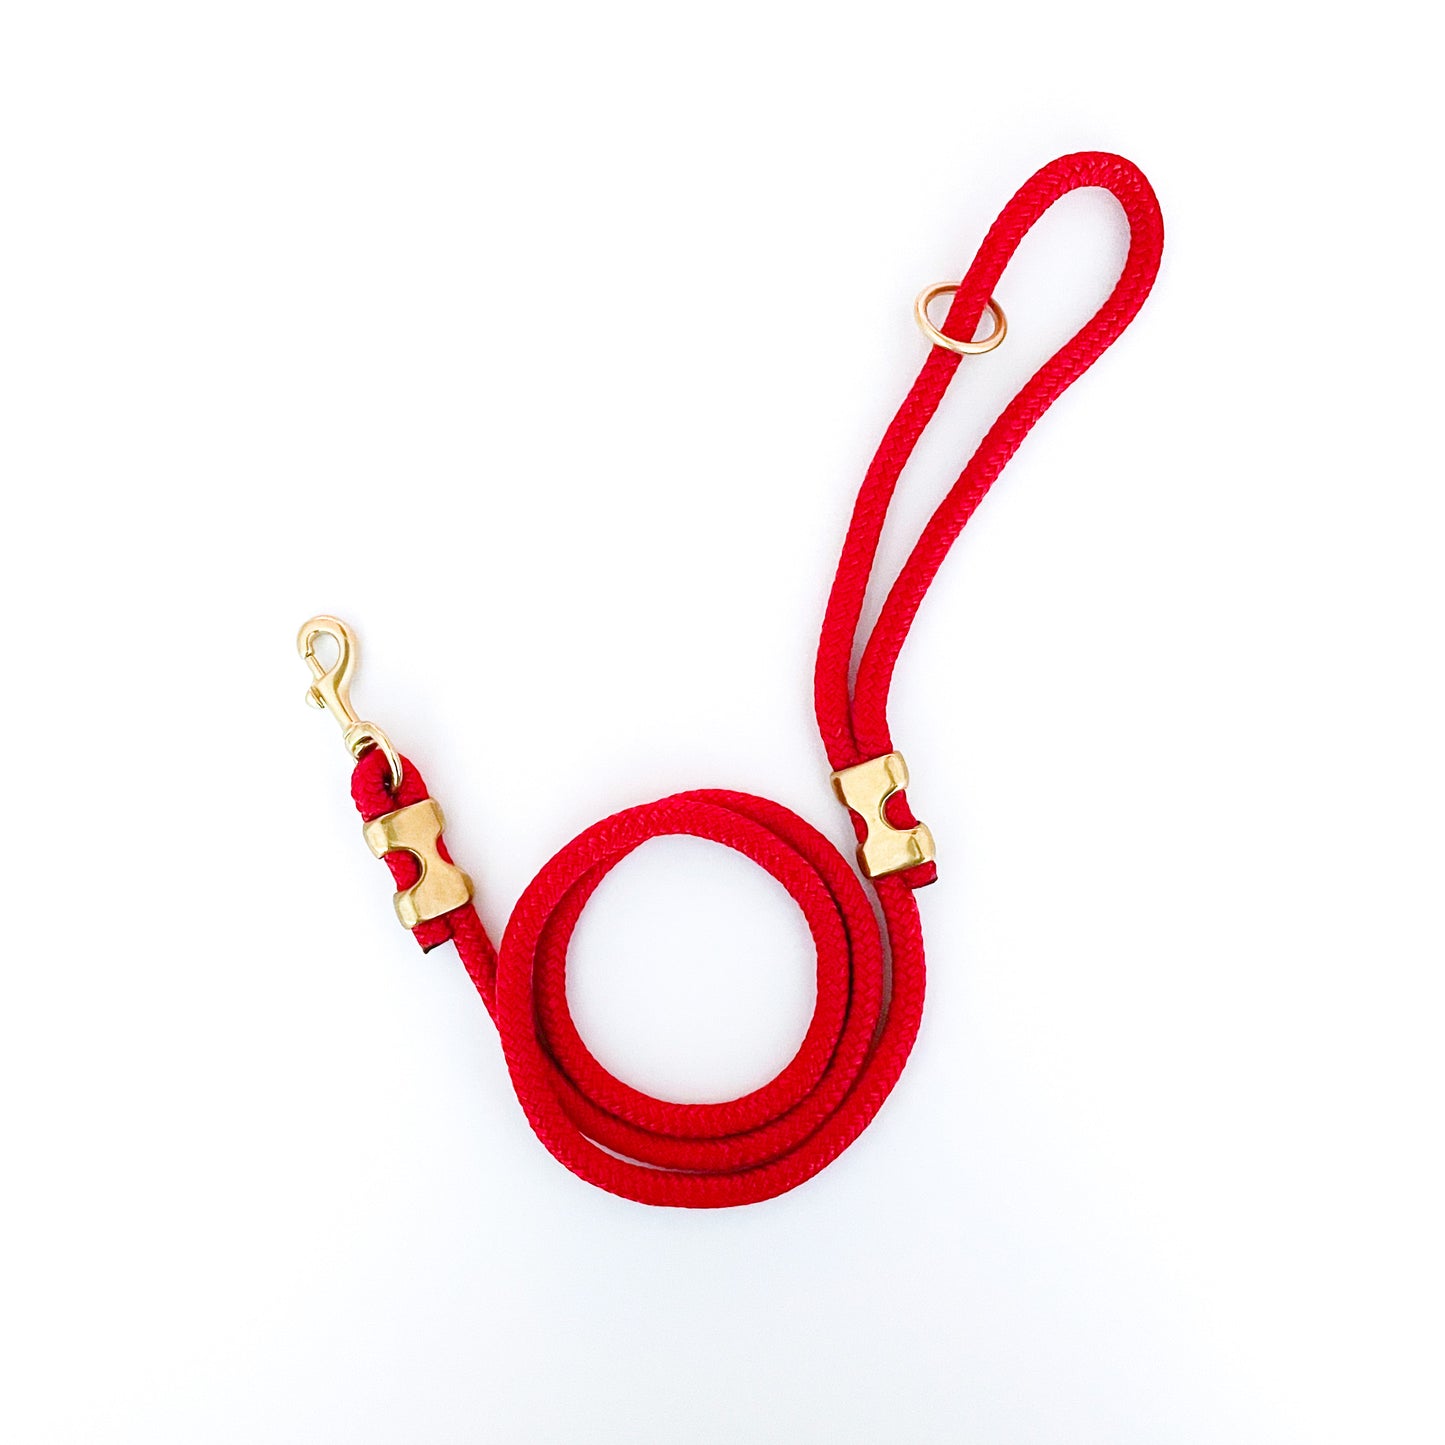 Crimson Red Rope Dog Leash